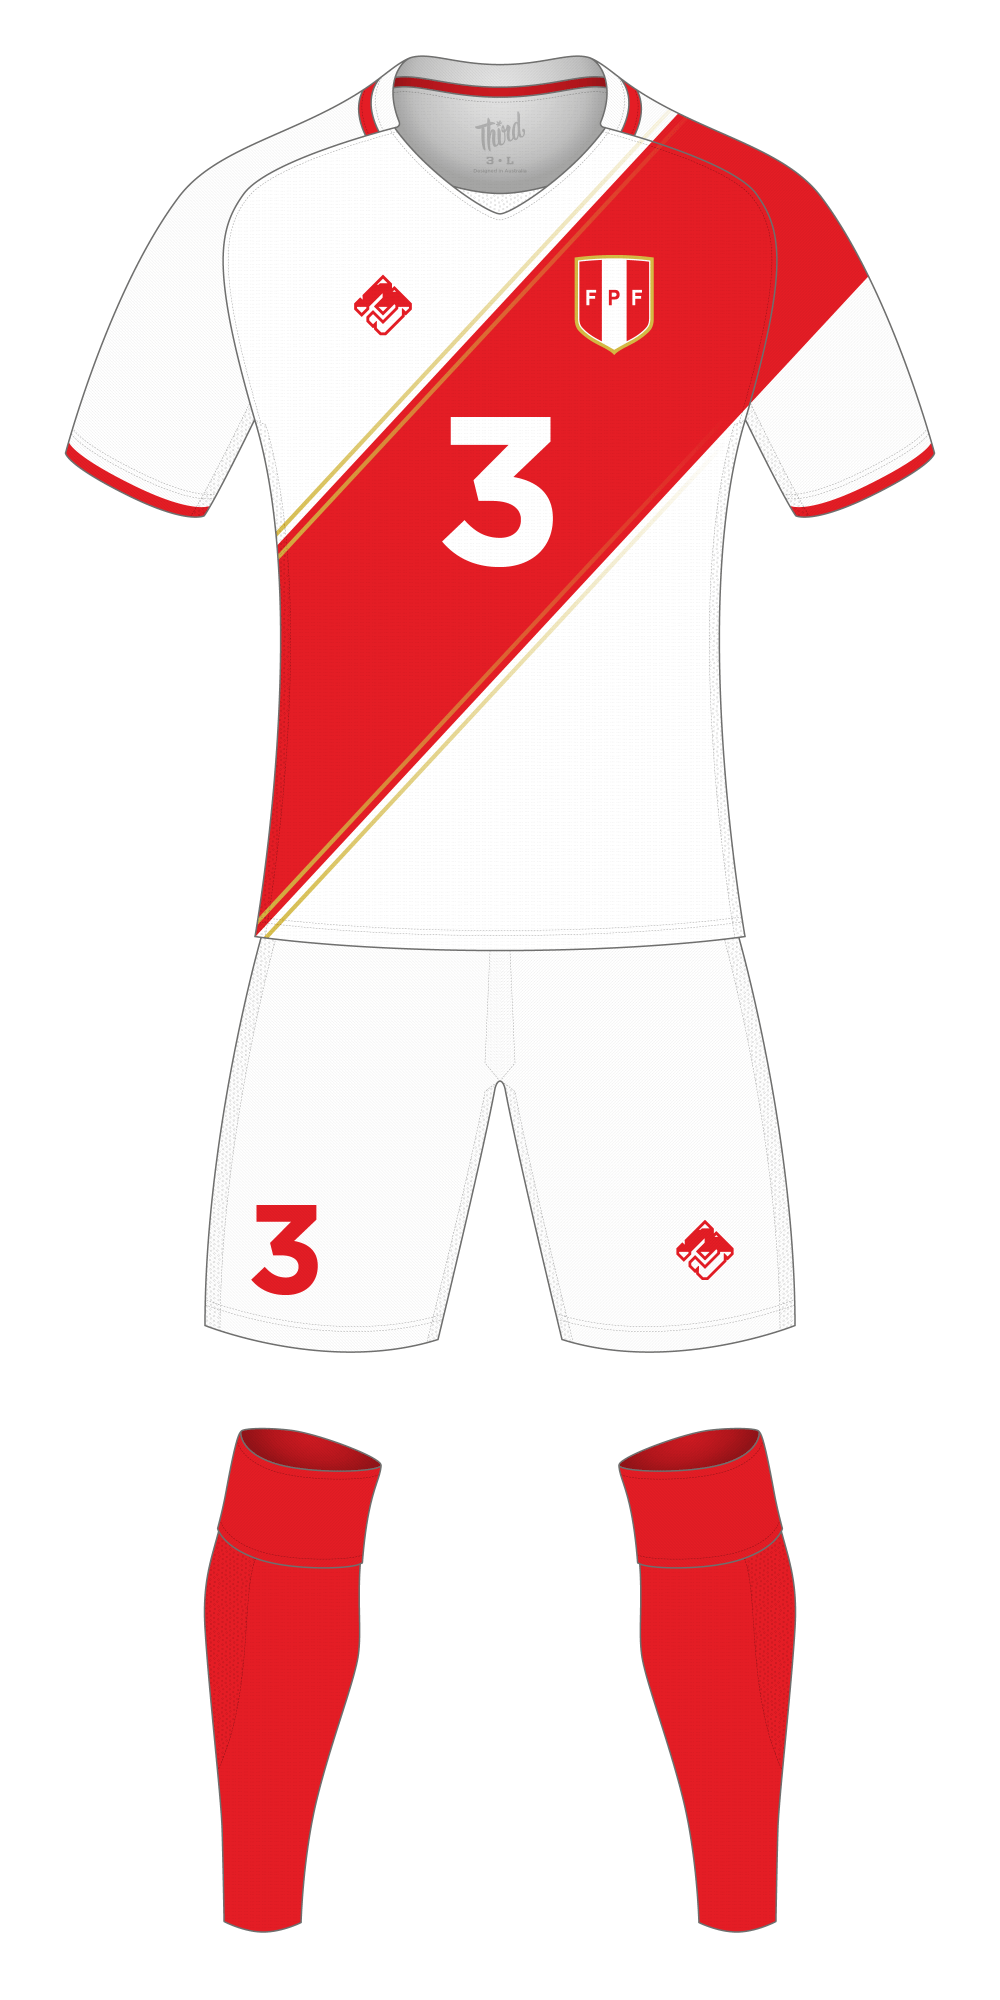 Peru World Cup 2018 concept